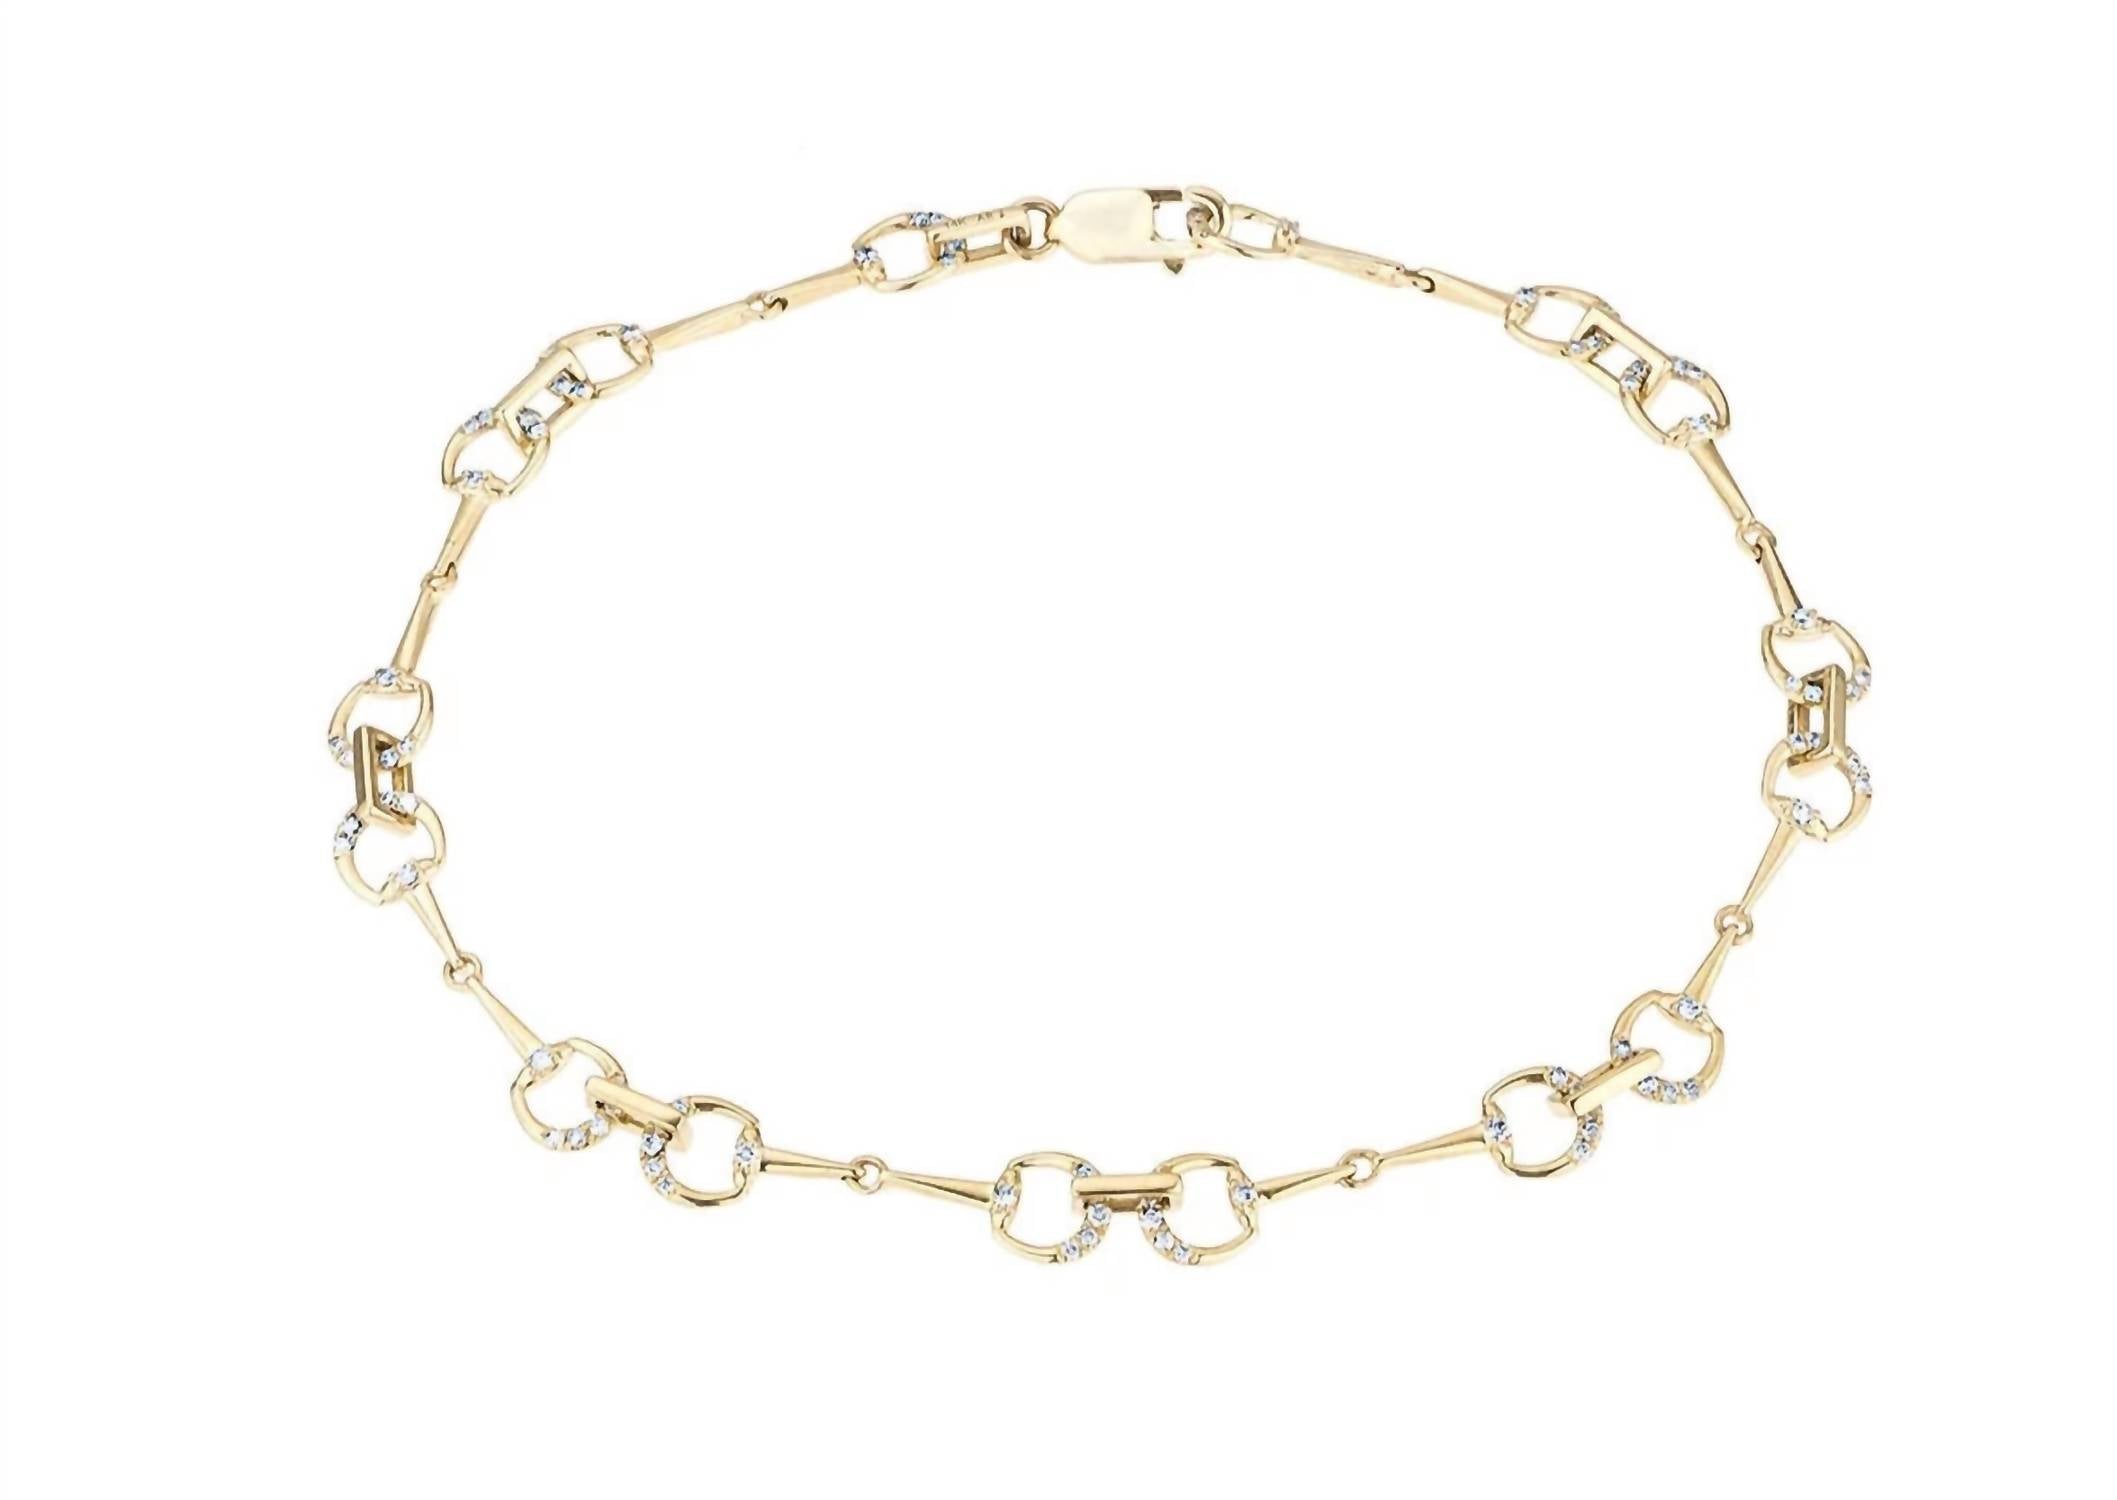 ADINA REYTER Pave Horsebit Chain Bracelet in 14K Yellow Gold